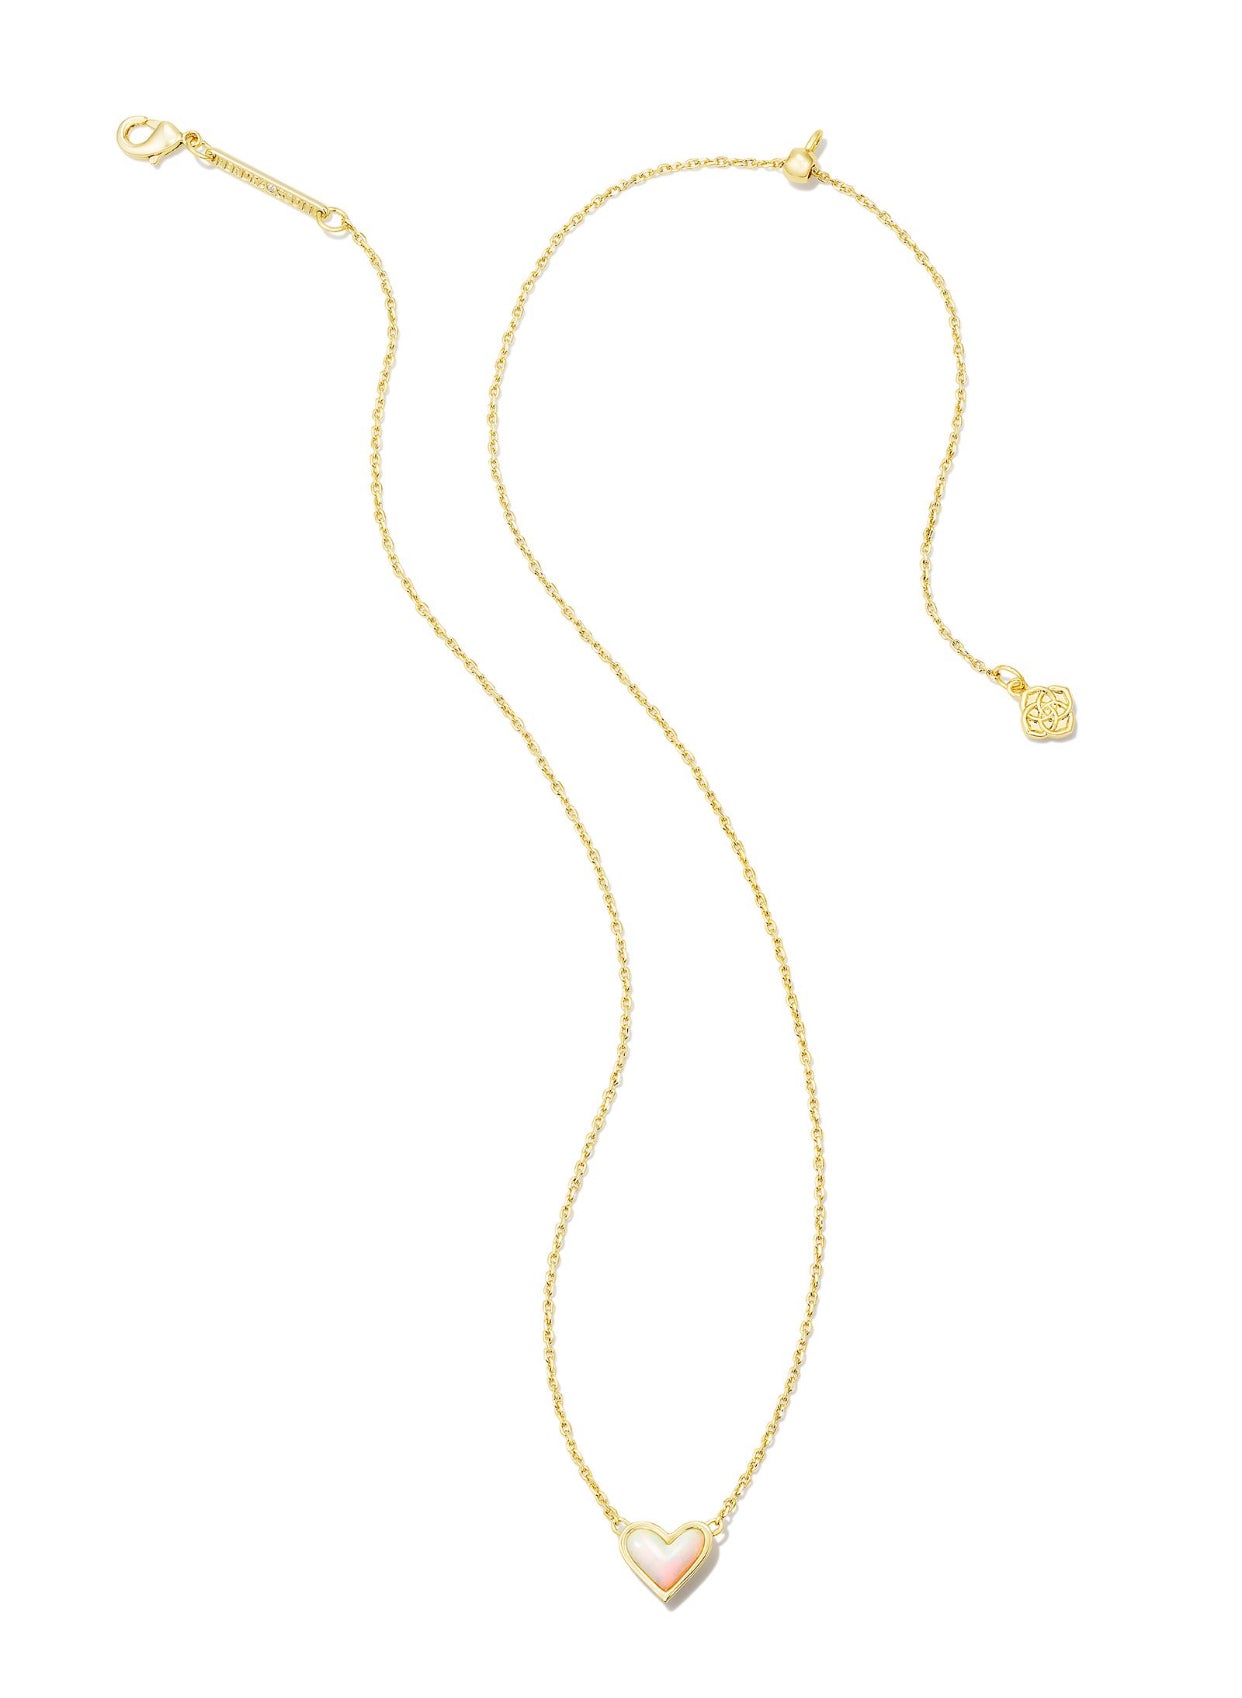 Ari Framed White Opalescent Heart Pendant Gold Necklace